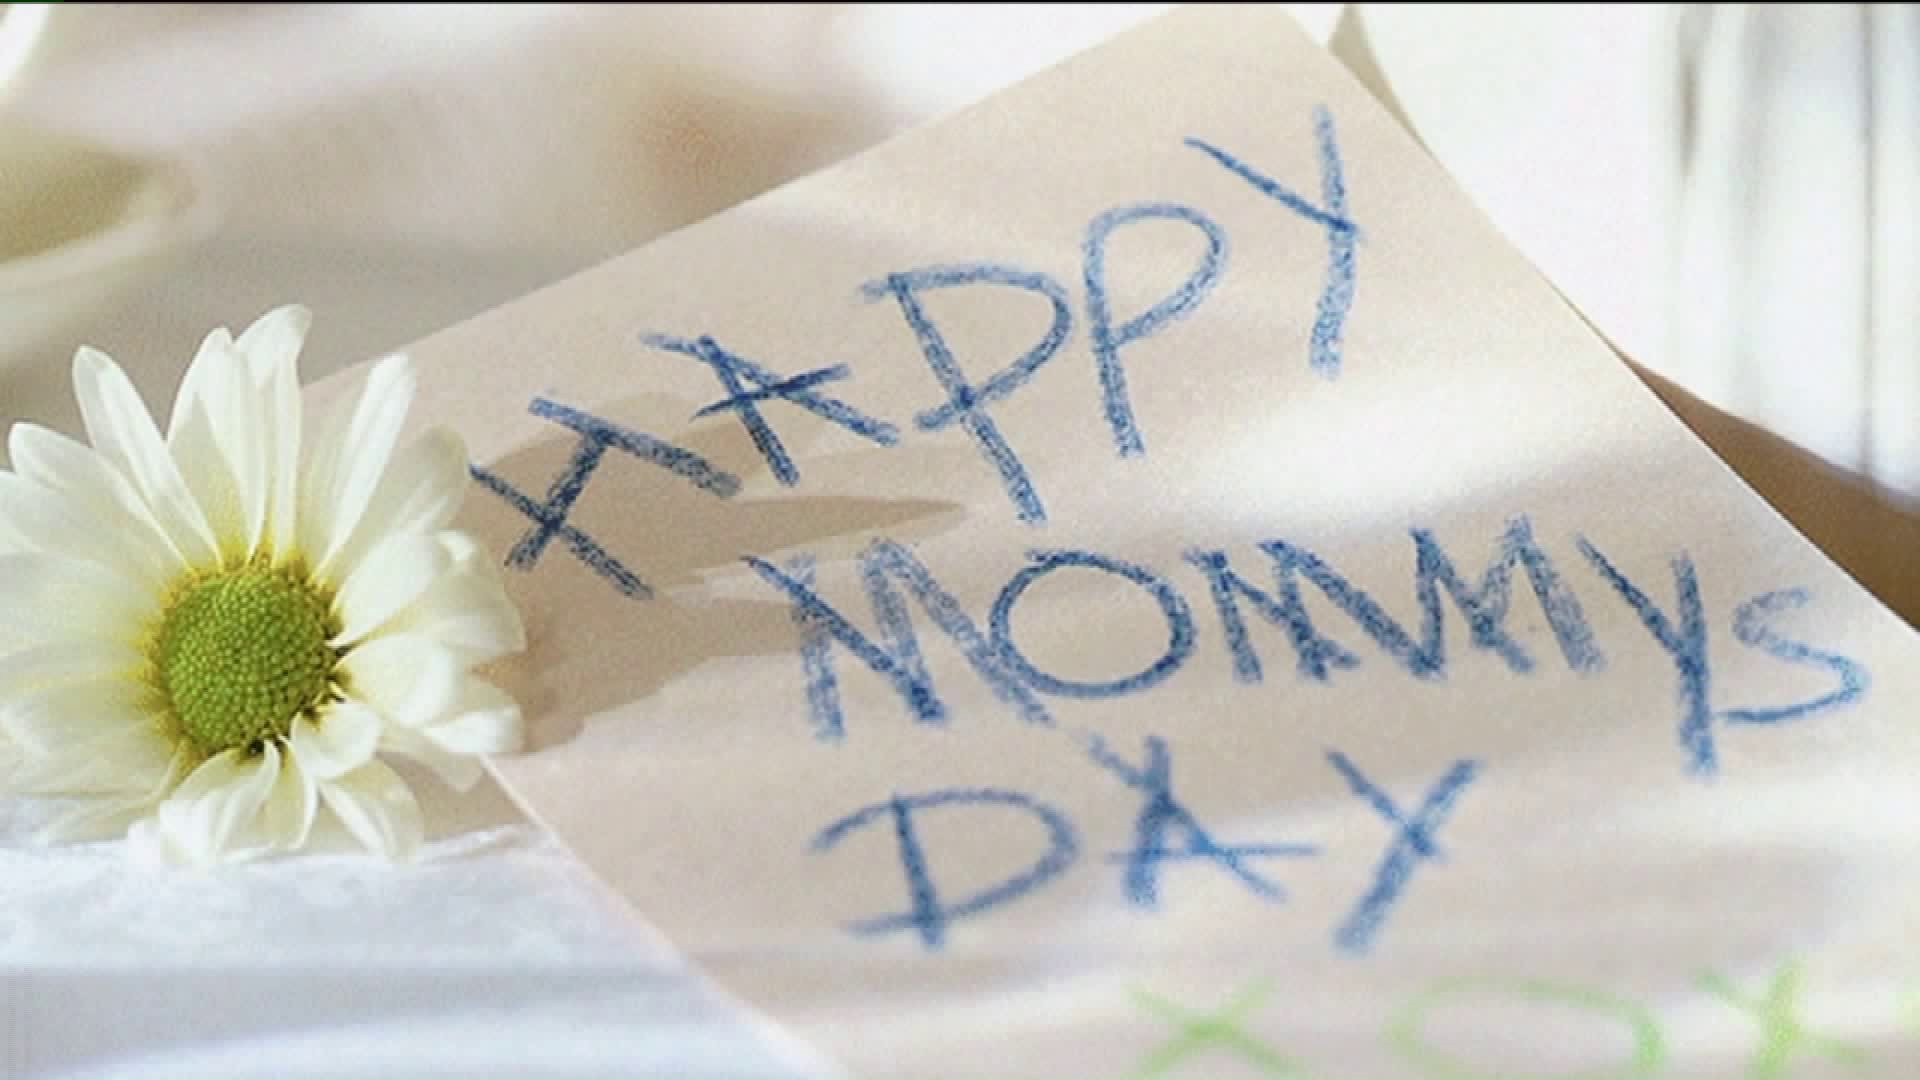 Melt Mom's Heart: Mother's Day Gift Ideas